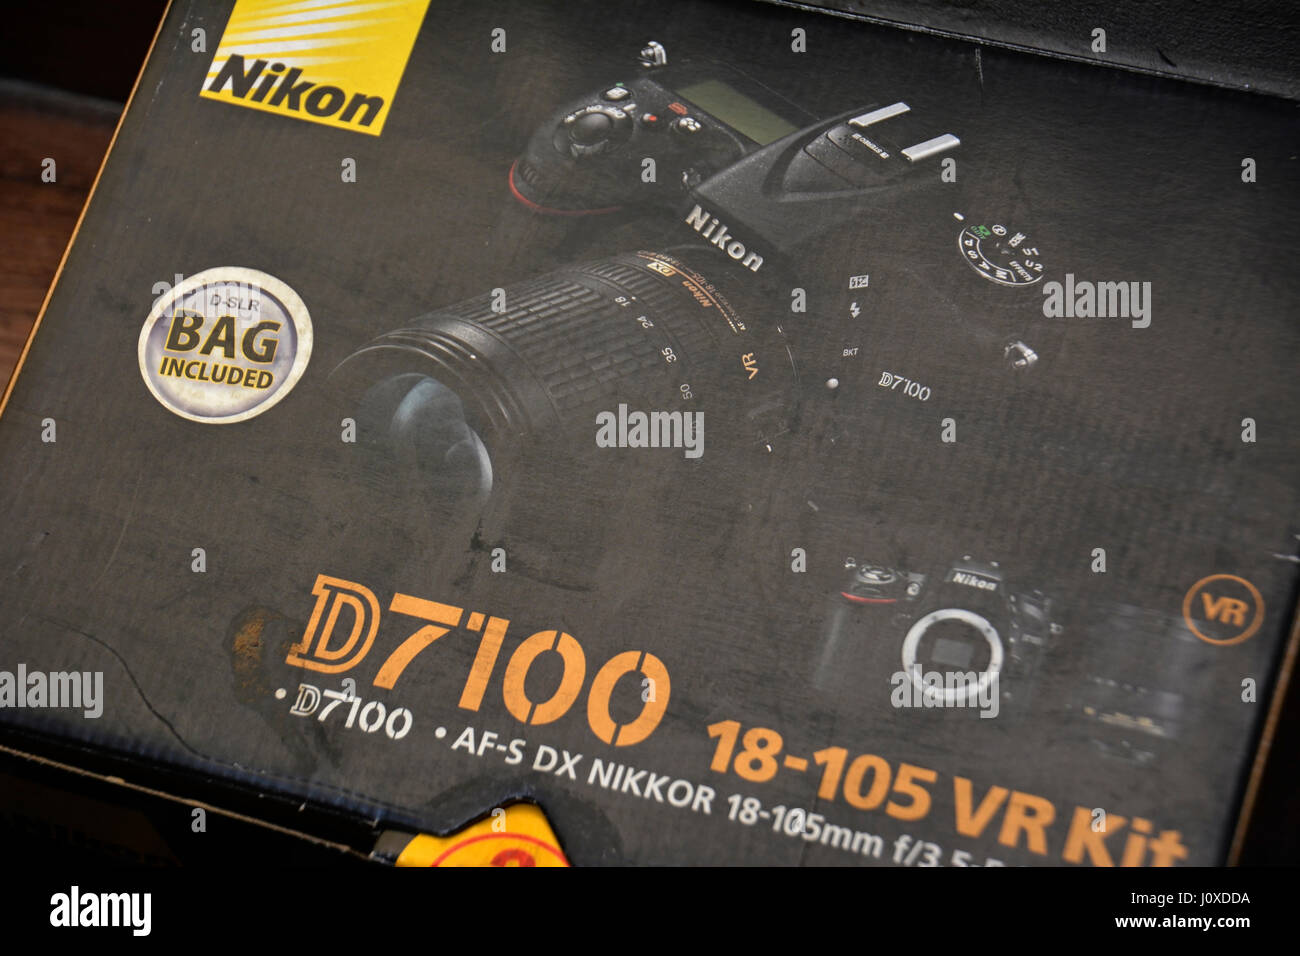 Nikon camera box hi-res stock photography and images - Alamy